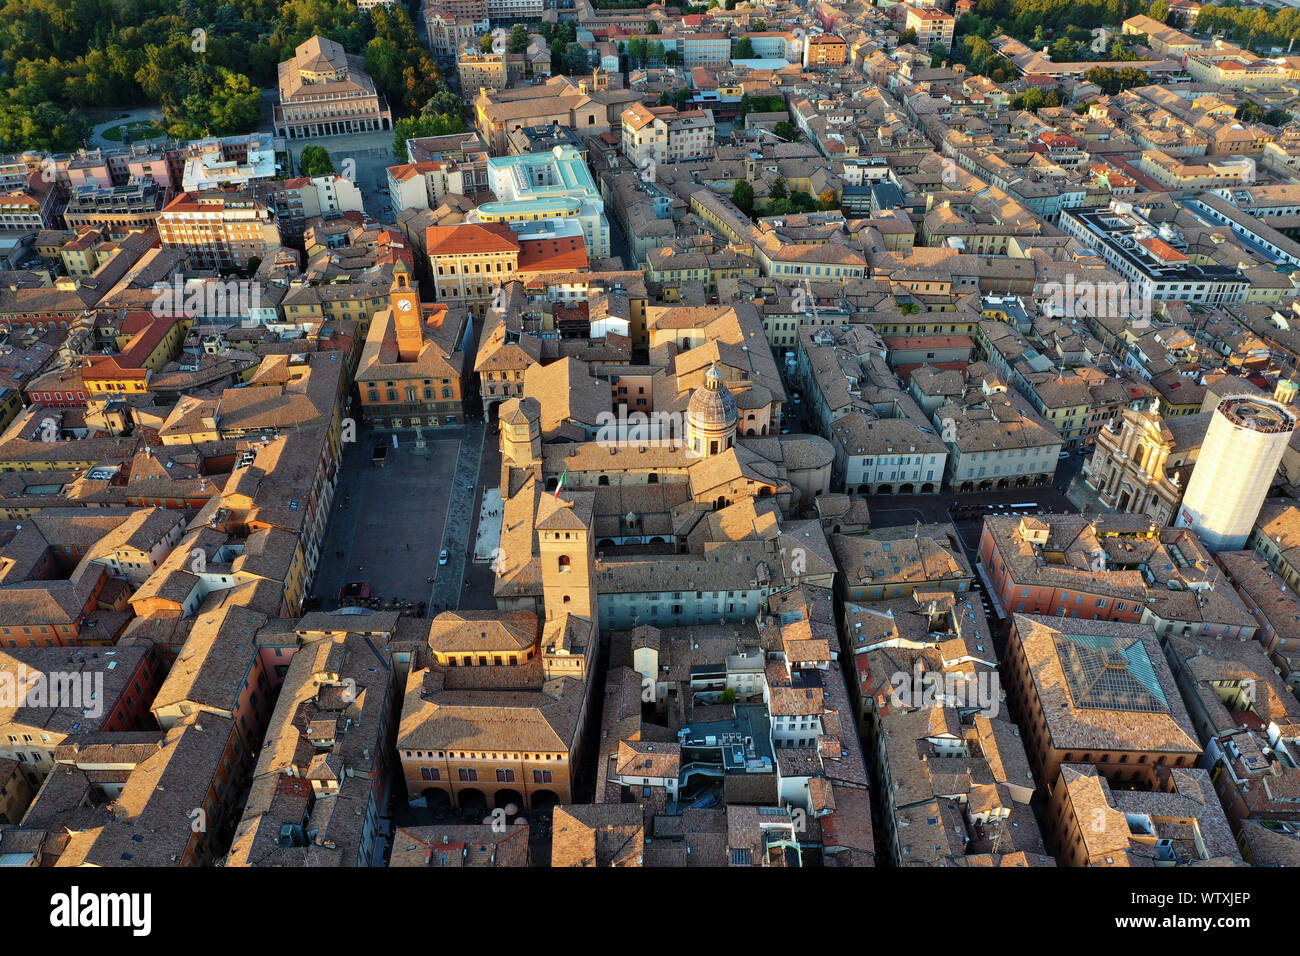 Aerial view of the Reggio Emilia town center, Emilia Romagna / Italy Stock Photo